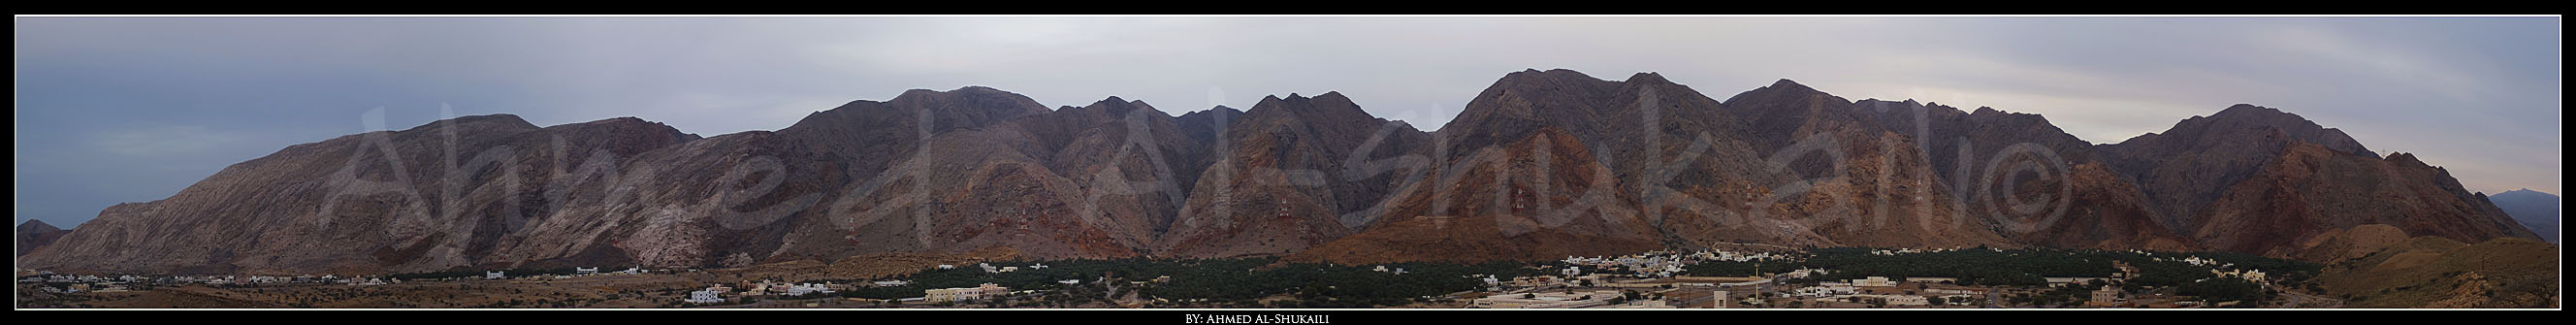 Panorama (oman mountains)